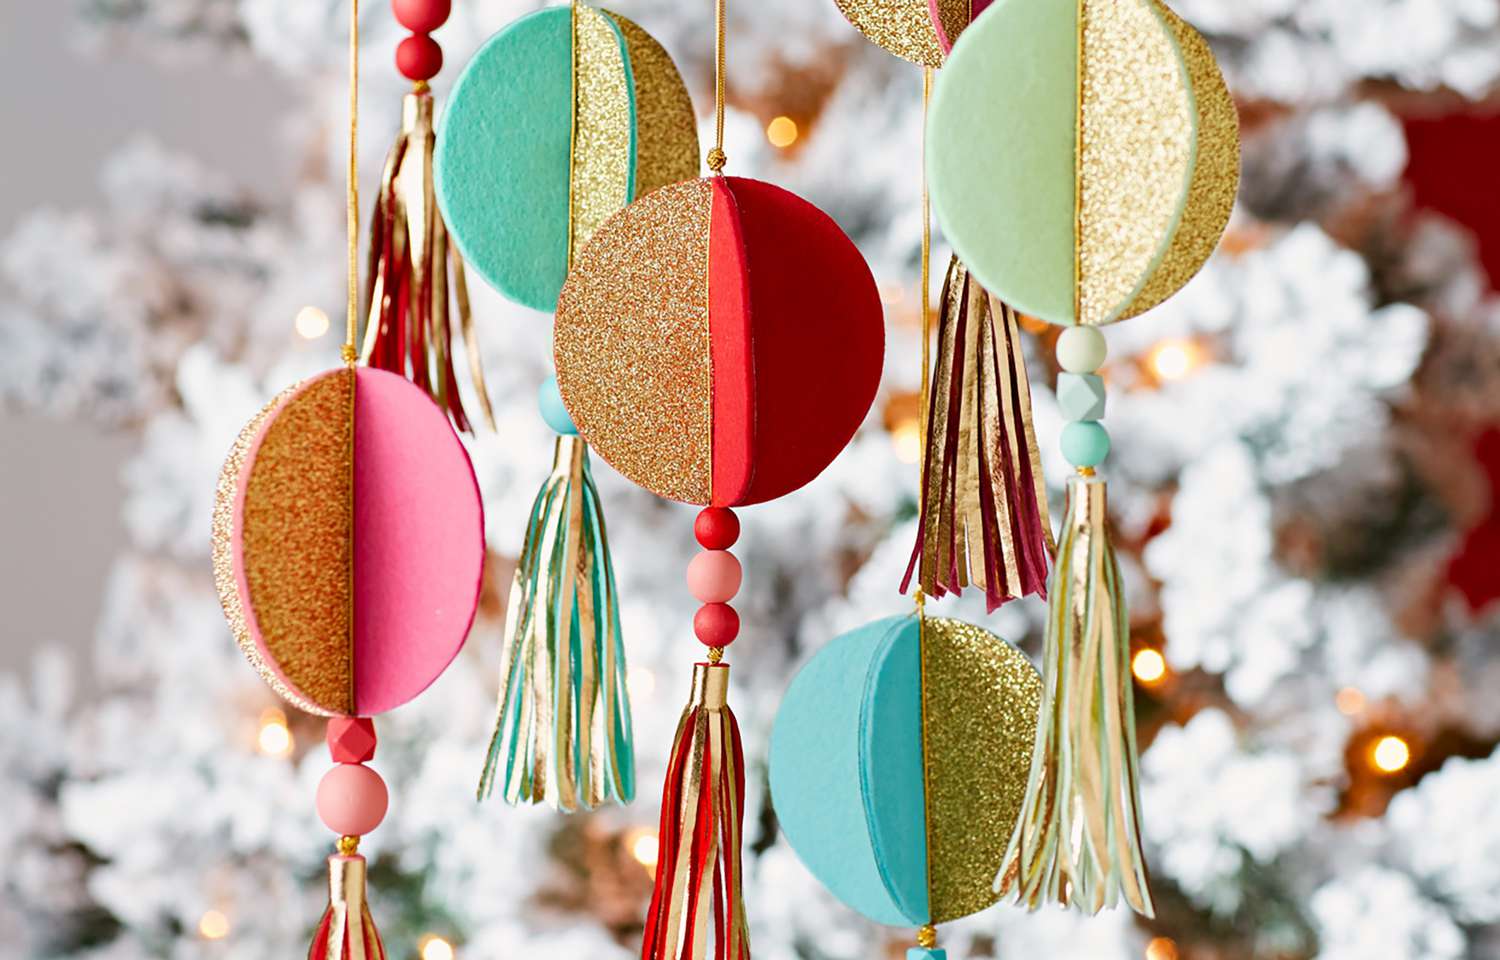 glittery felt hanging ornaments